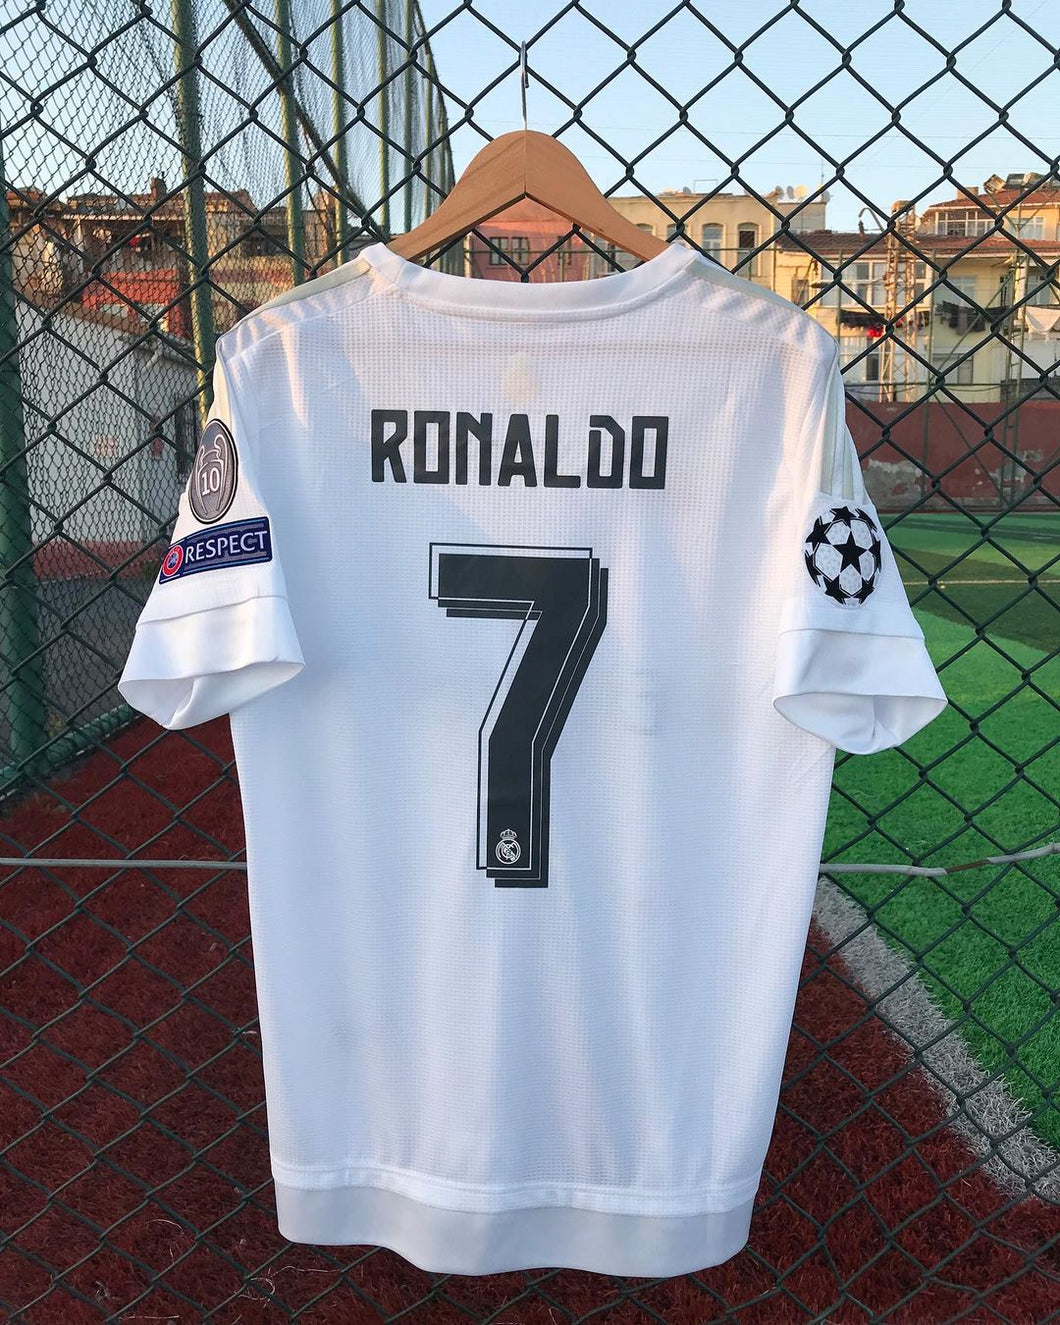 2016 Real Madrid Final Milano home kit